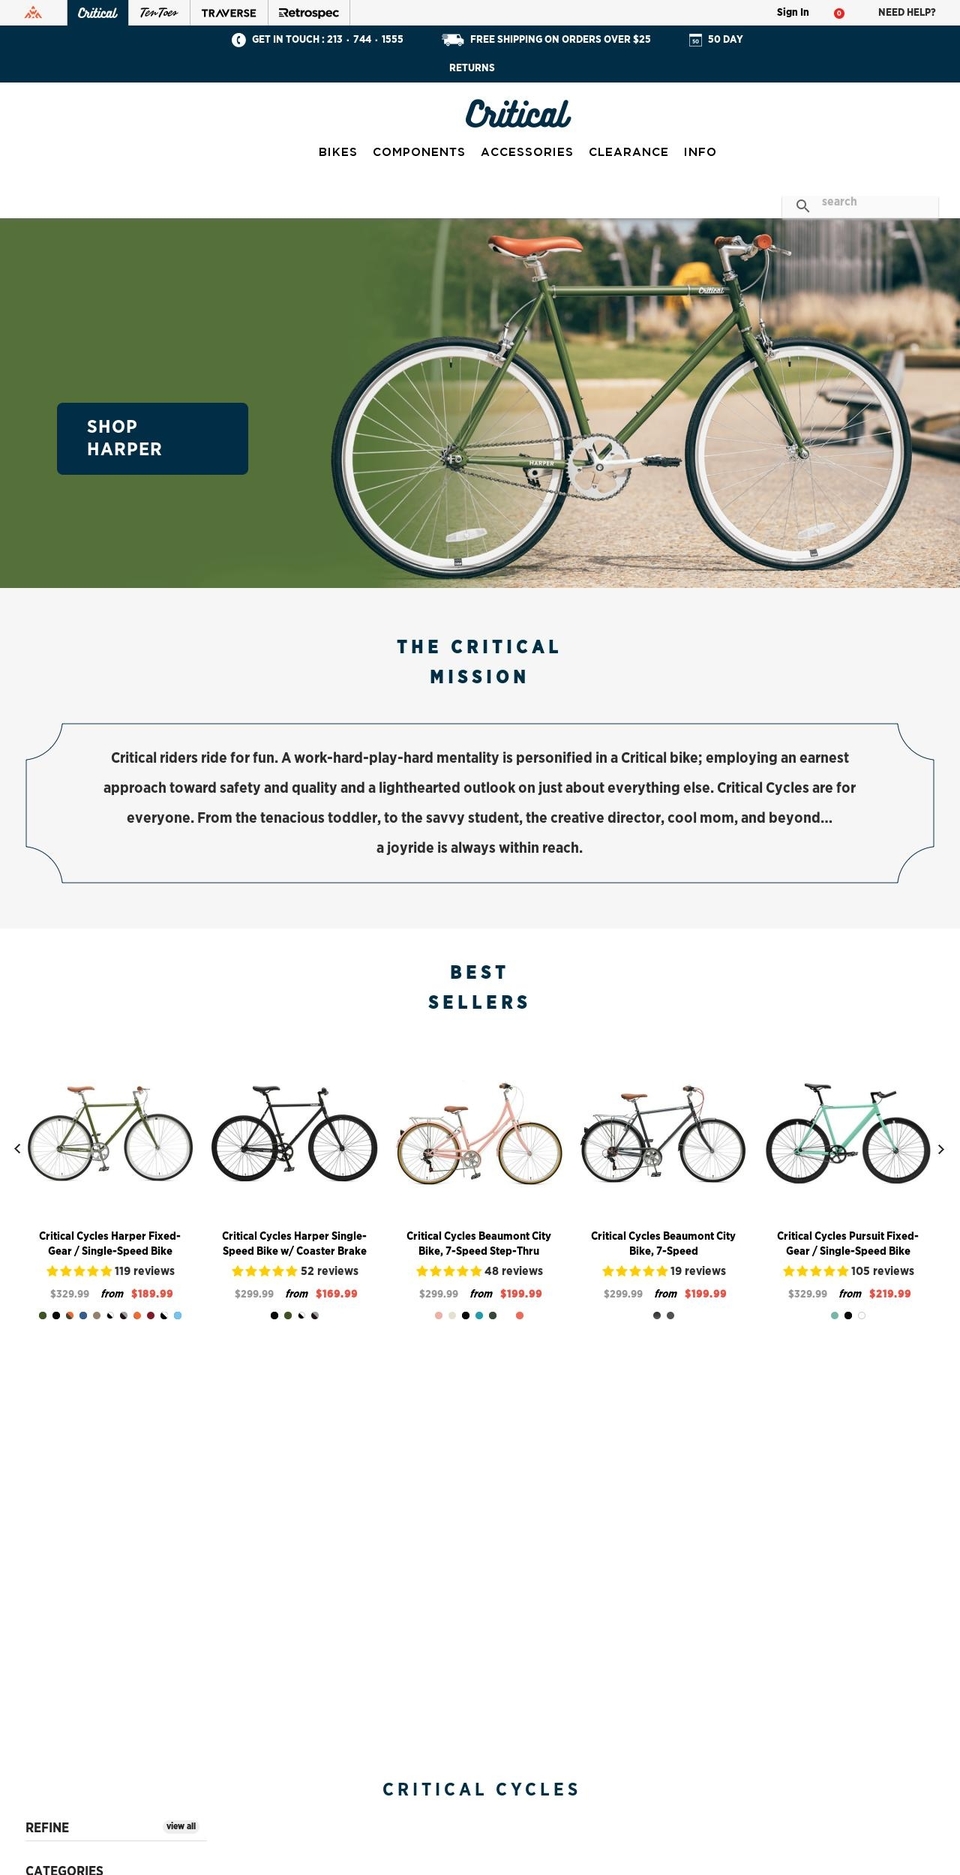 criticalcycle.com shopify website screenshot